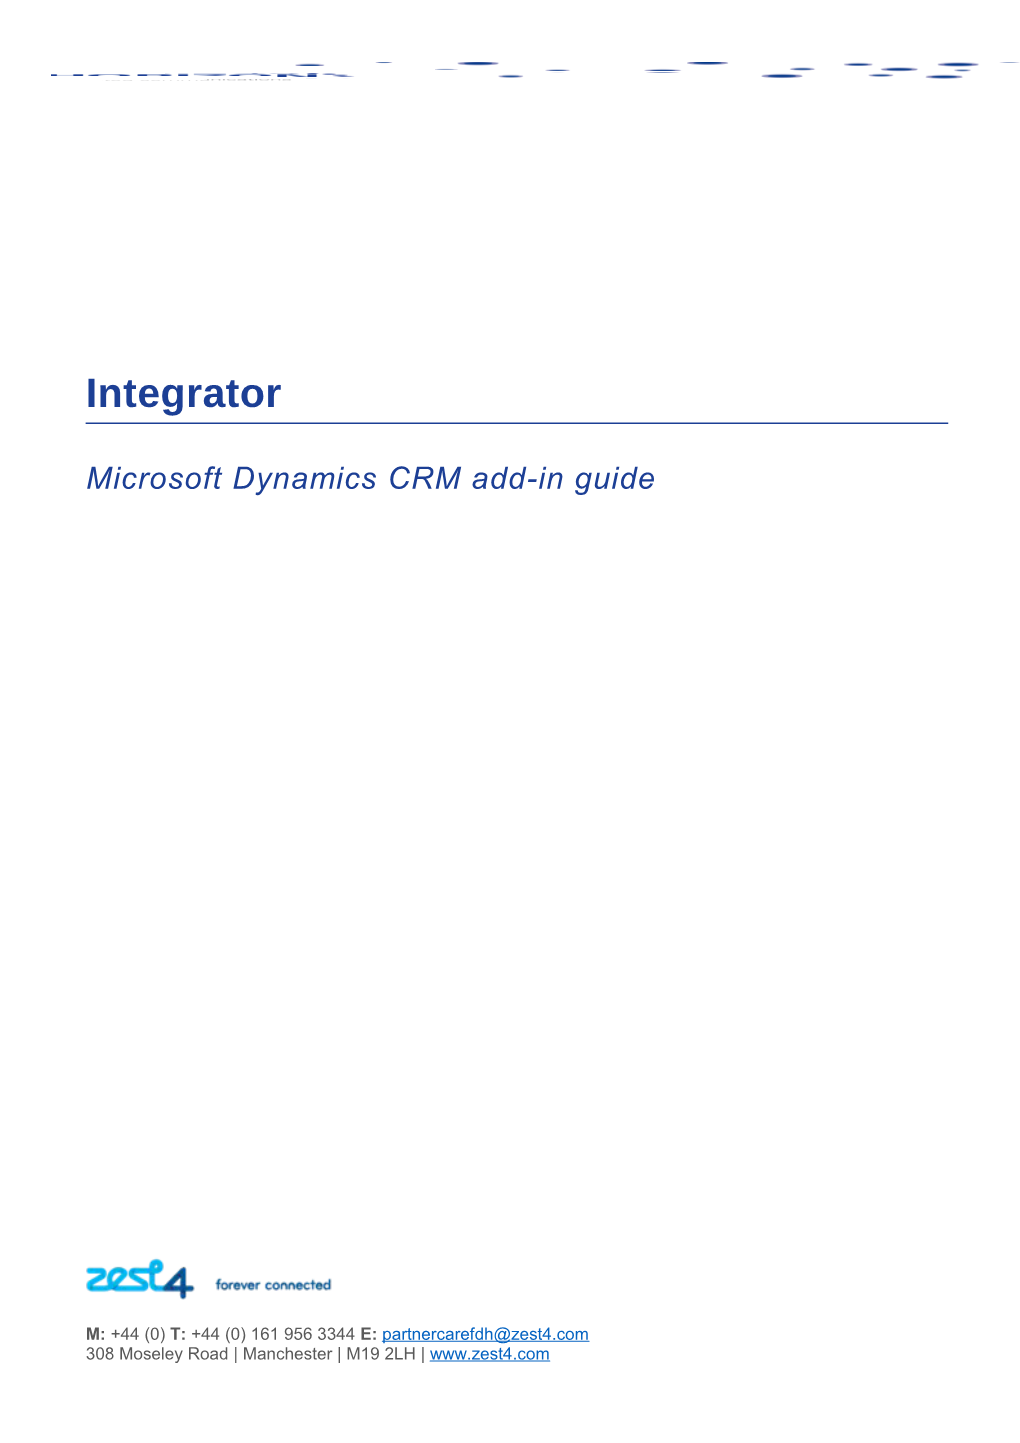 Microsoft Dynamics CRM Add-In Guide